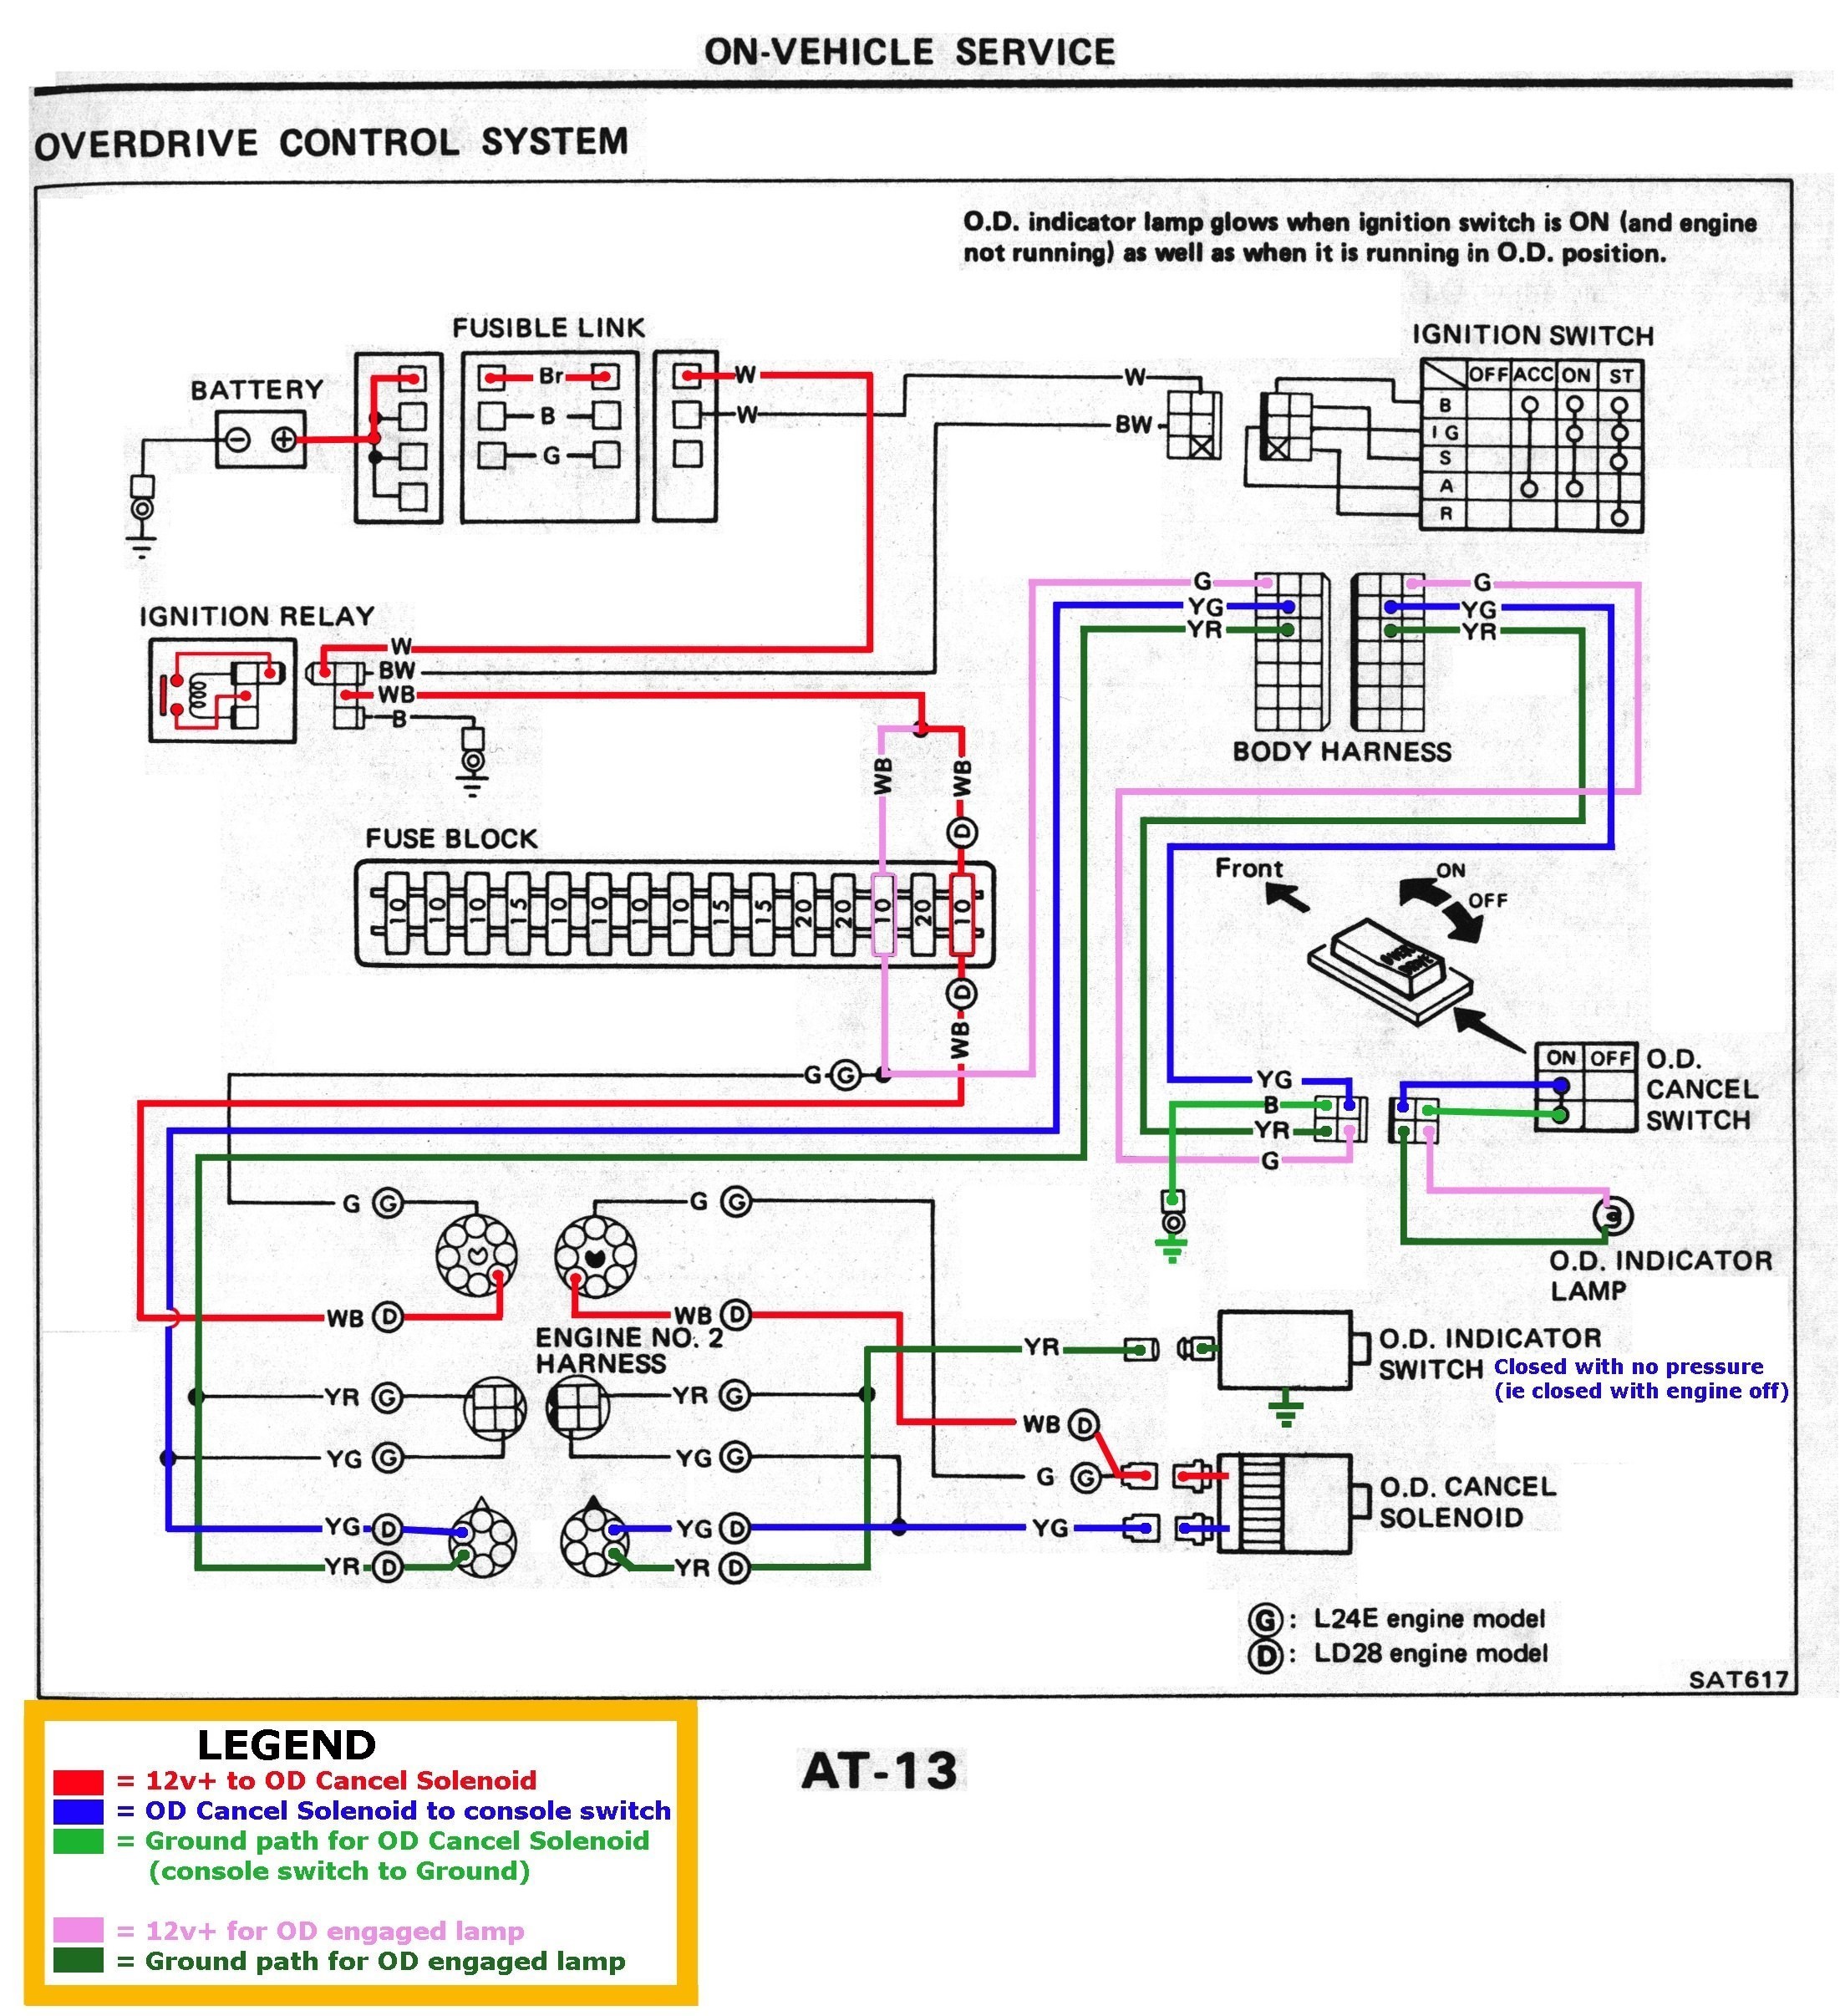 Wiring Diagram Electric Oil Pressure Gauge Valid Nissan 300zx Engine Bay Wiring Diagram Example Electrical Wiring